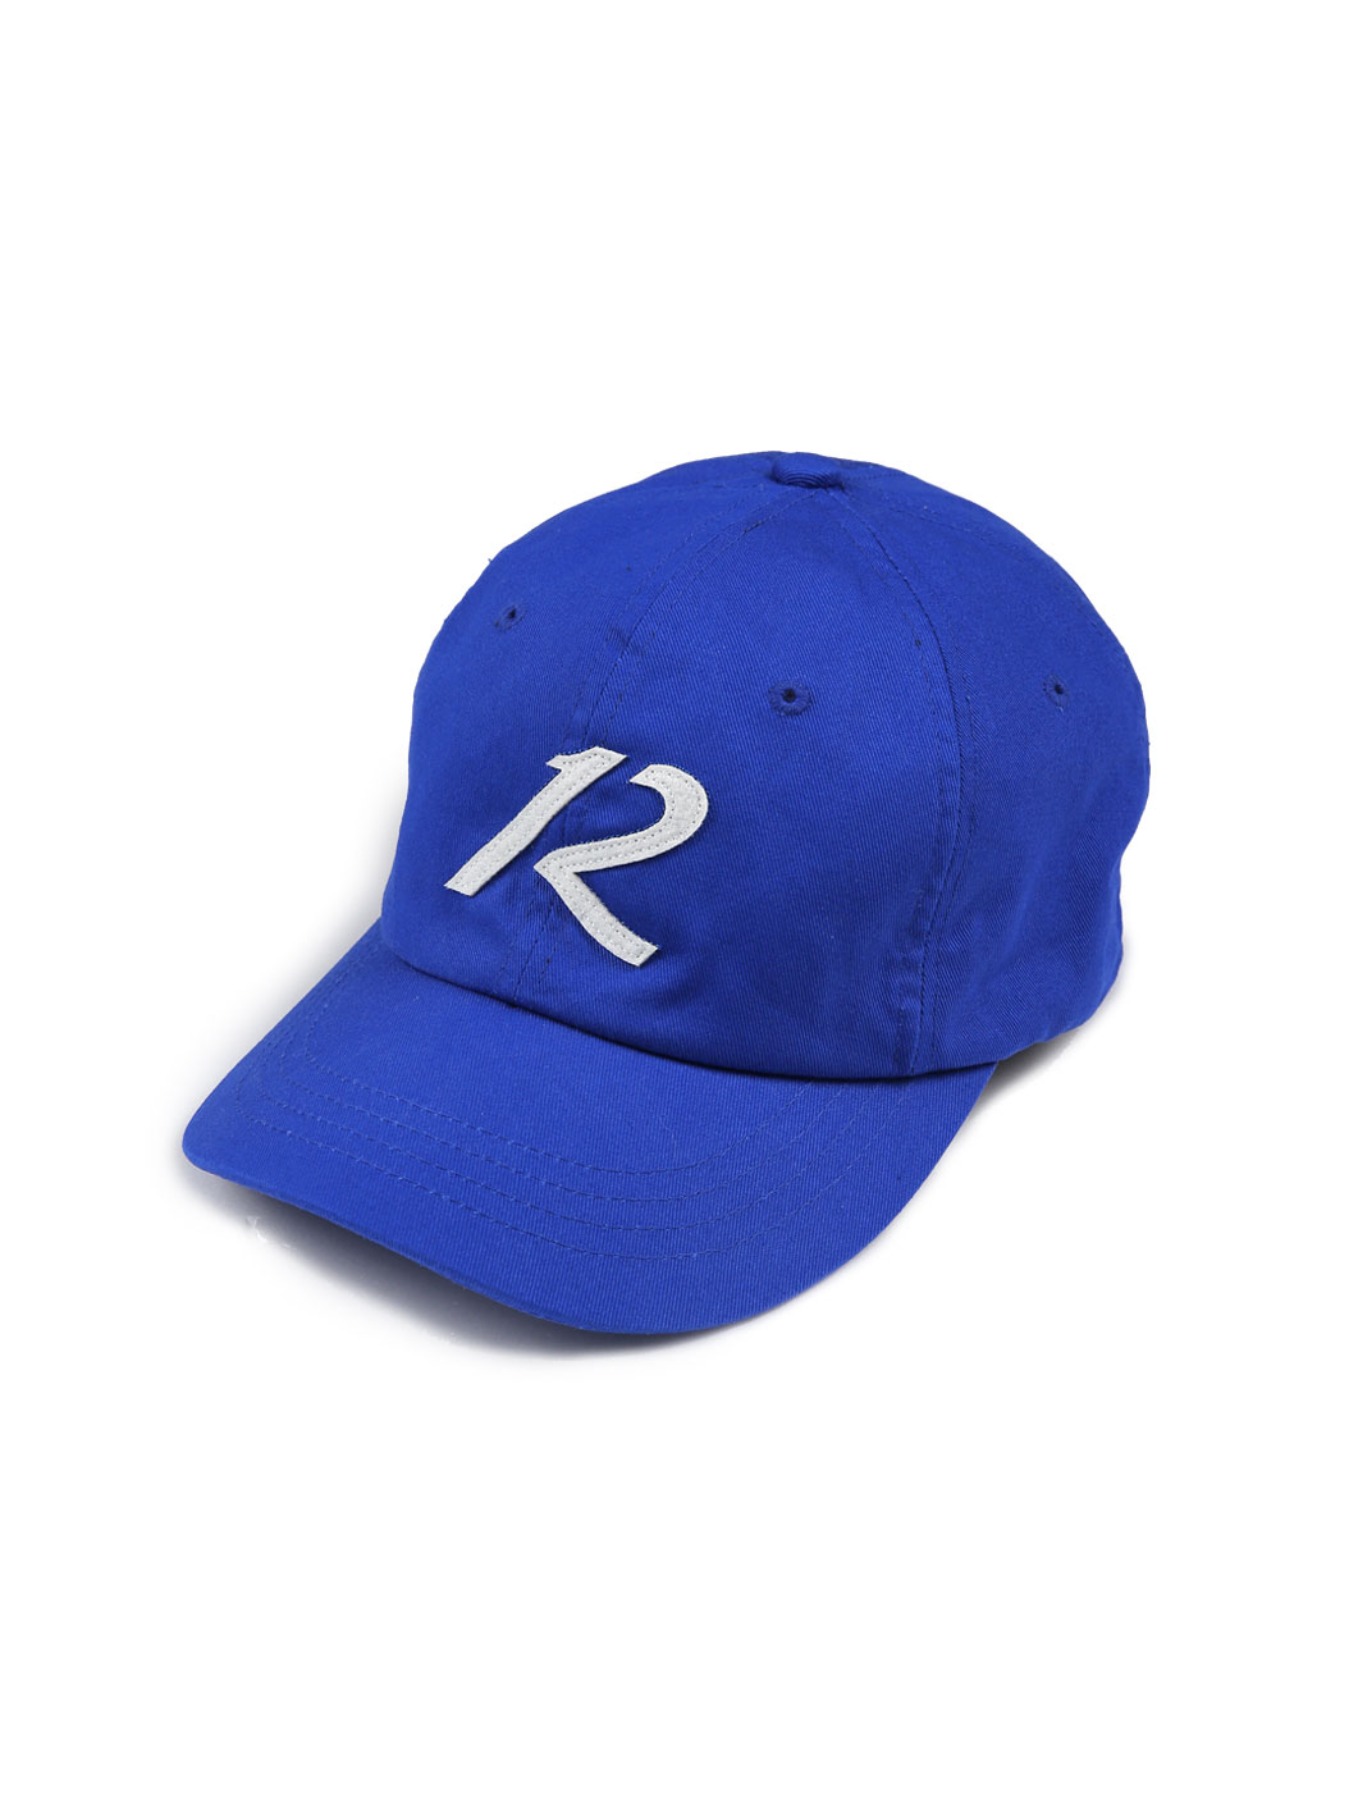 Symmetric R-logo cap #9 [blue]